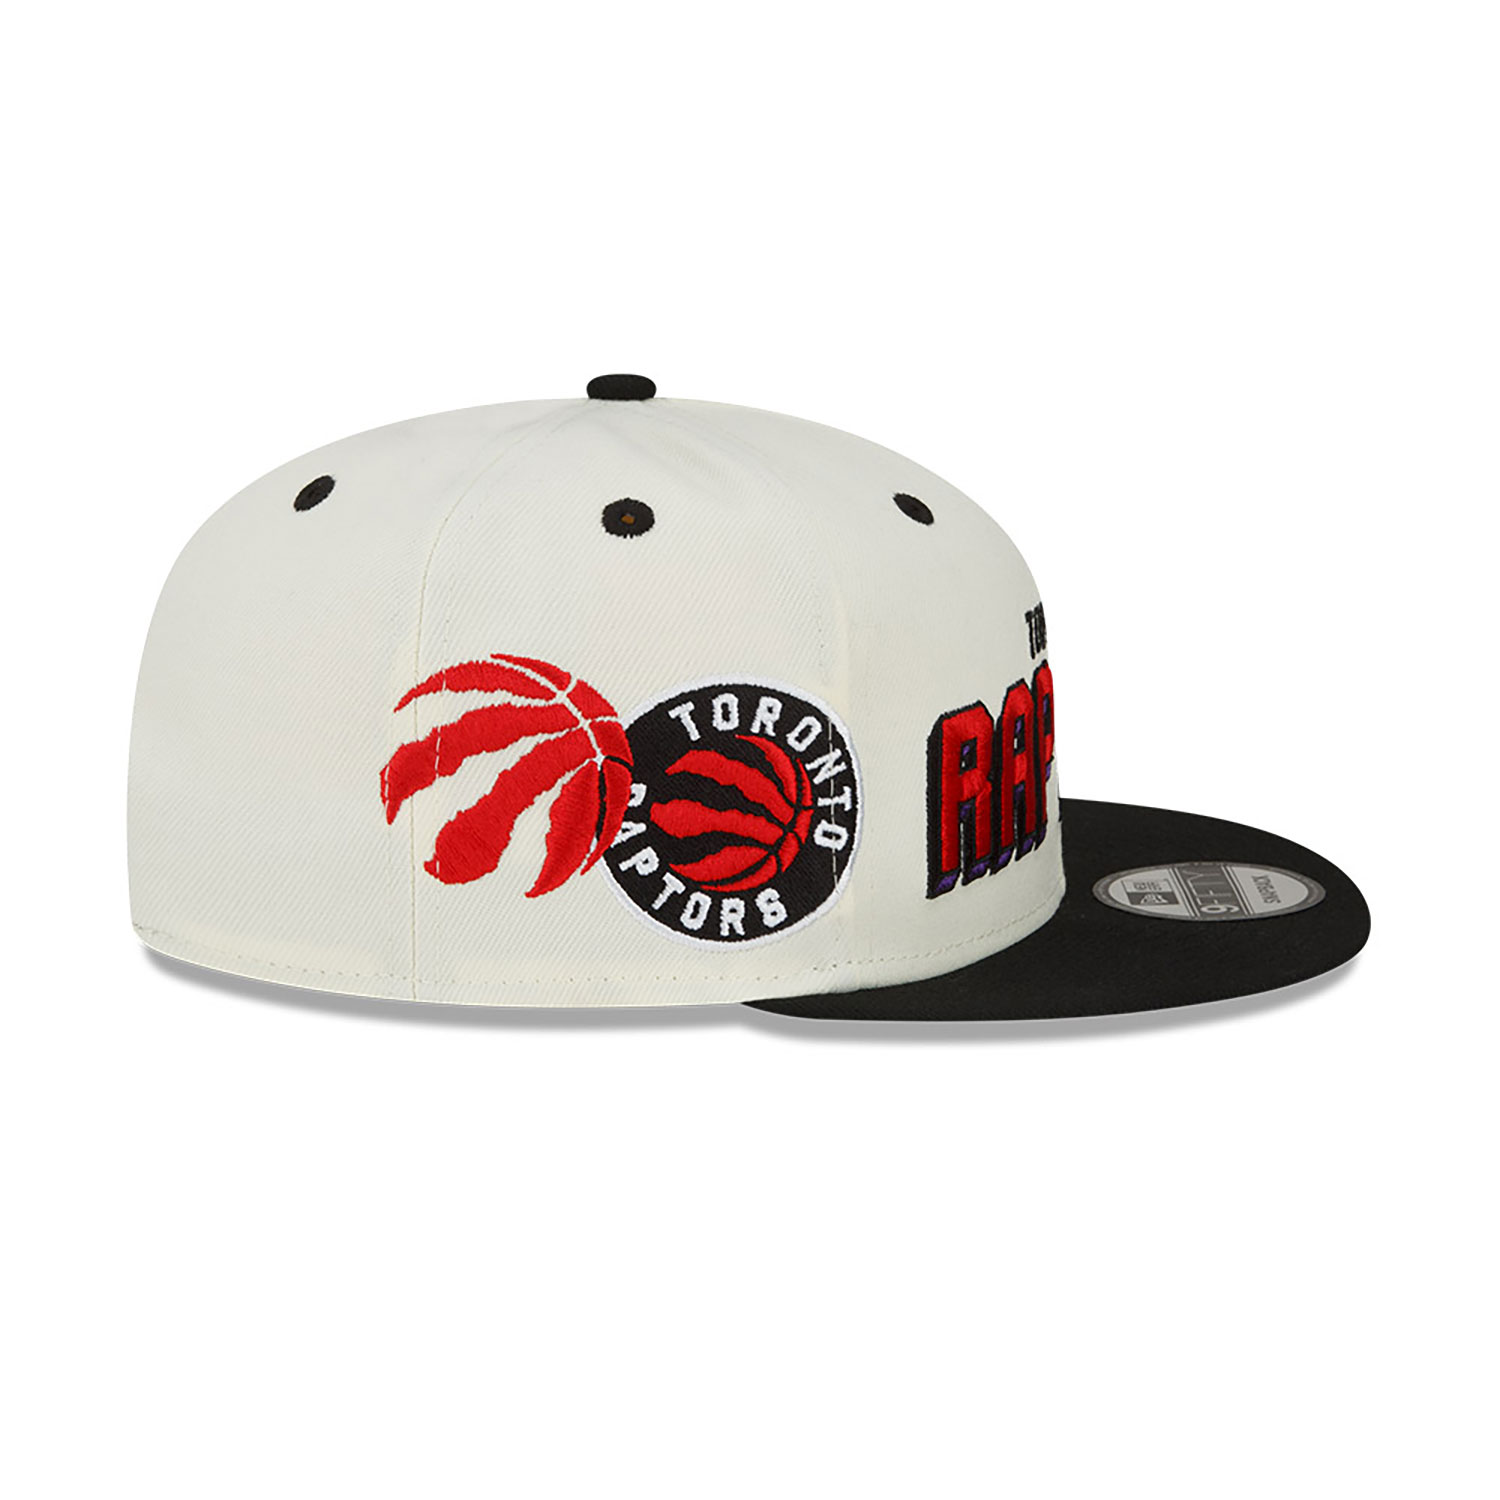 Official New Era Awake NBA Toronto Raptors White 9FIFTY Cap B8878_9